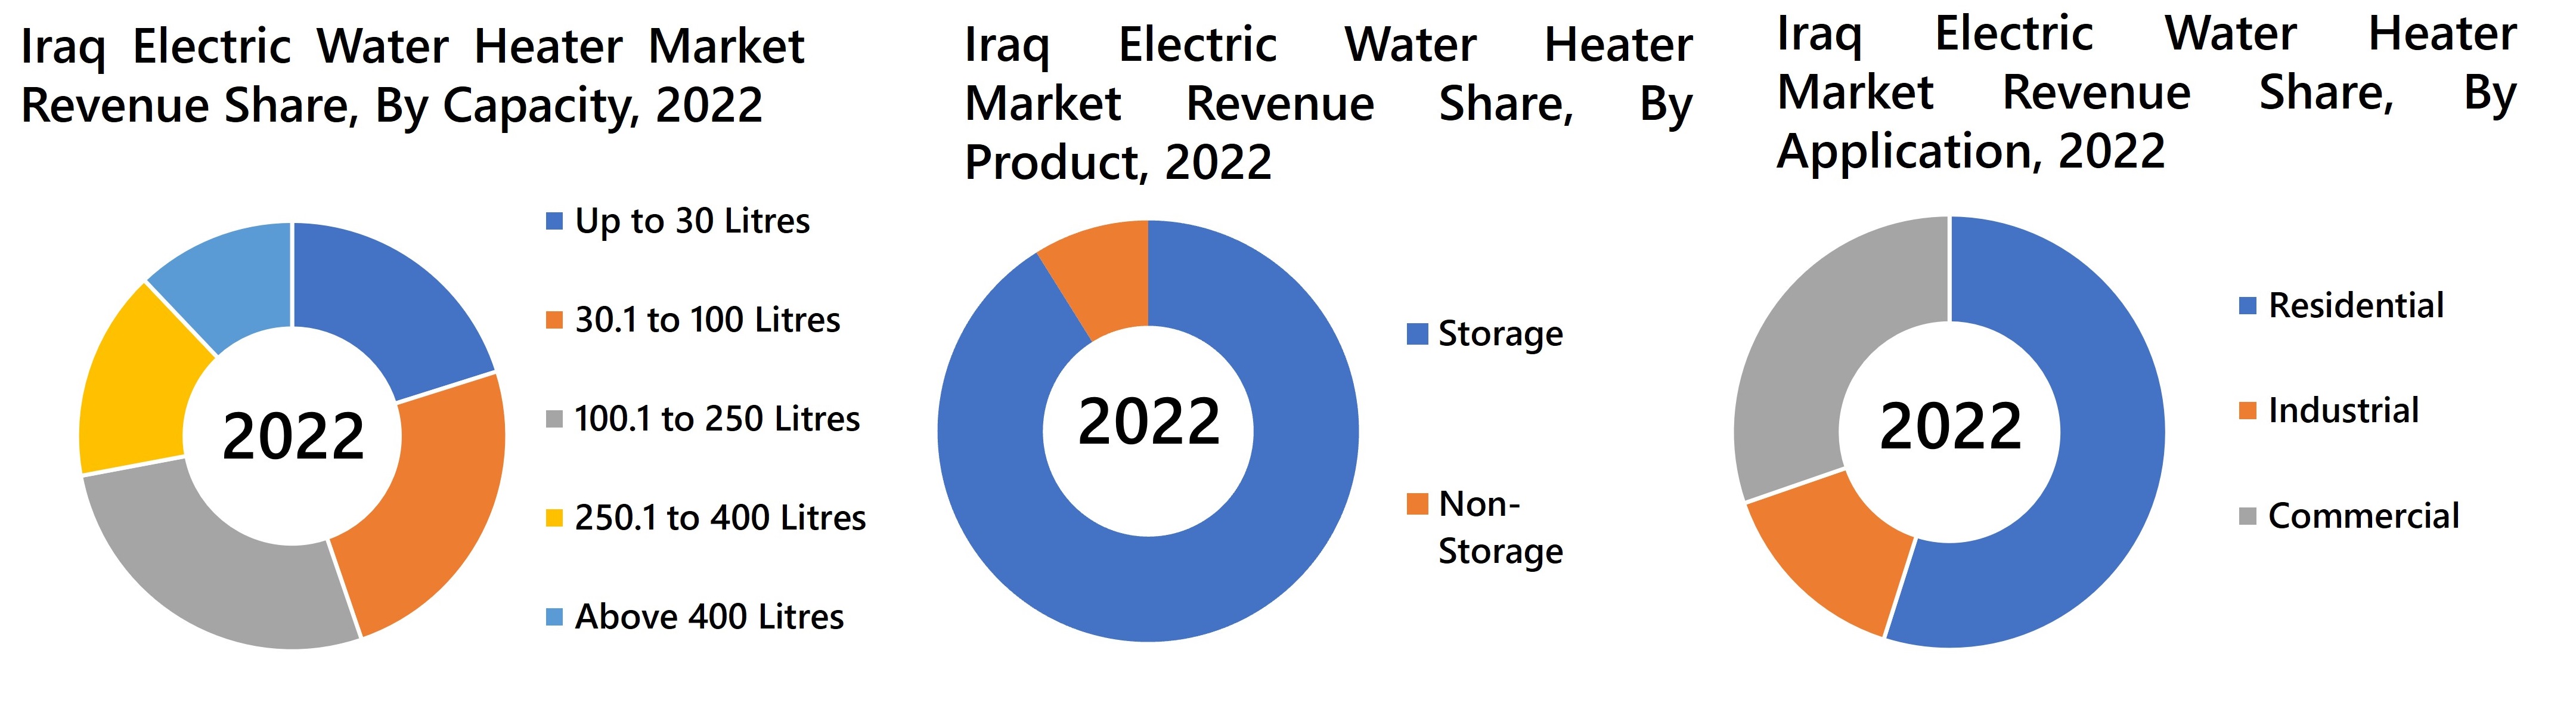 Iraq Electric Water Heater Market Revenue Share